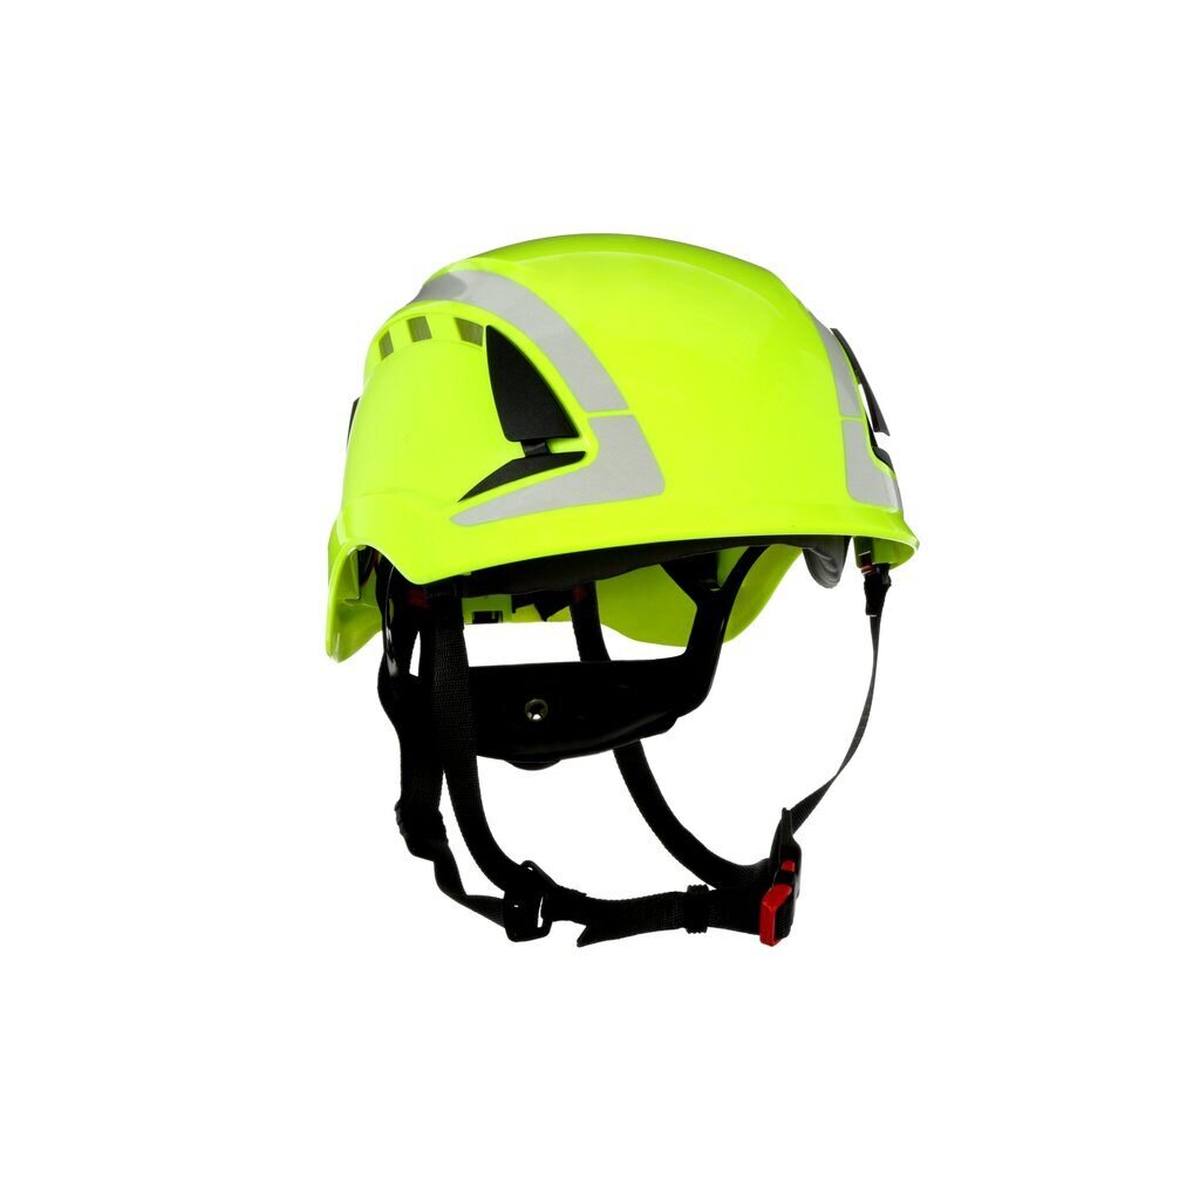 3M SecureFit safety helmet, X5014V-CE, neon green, ventilated, reflective, CE